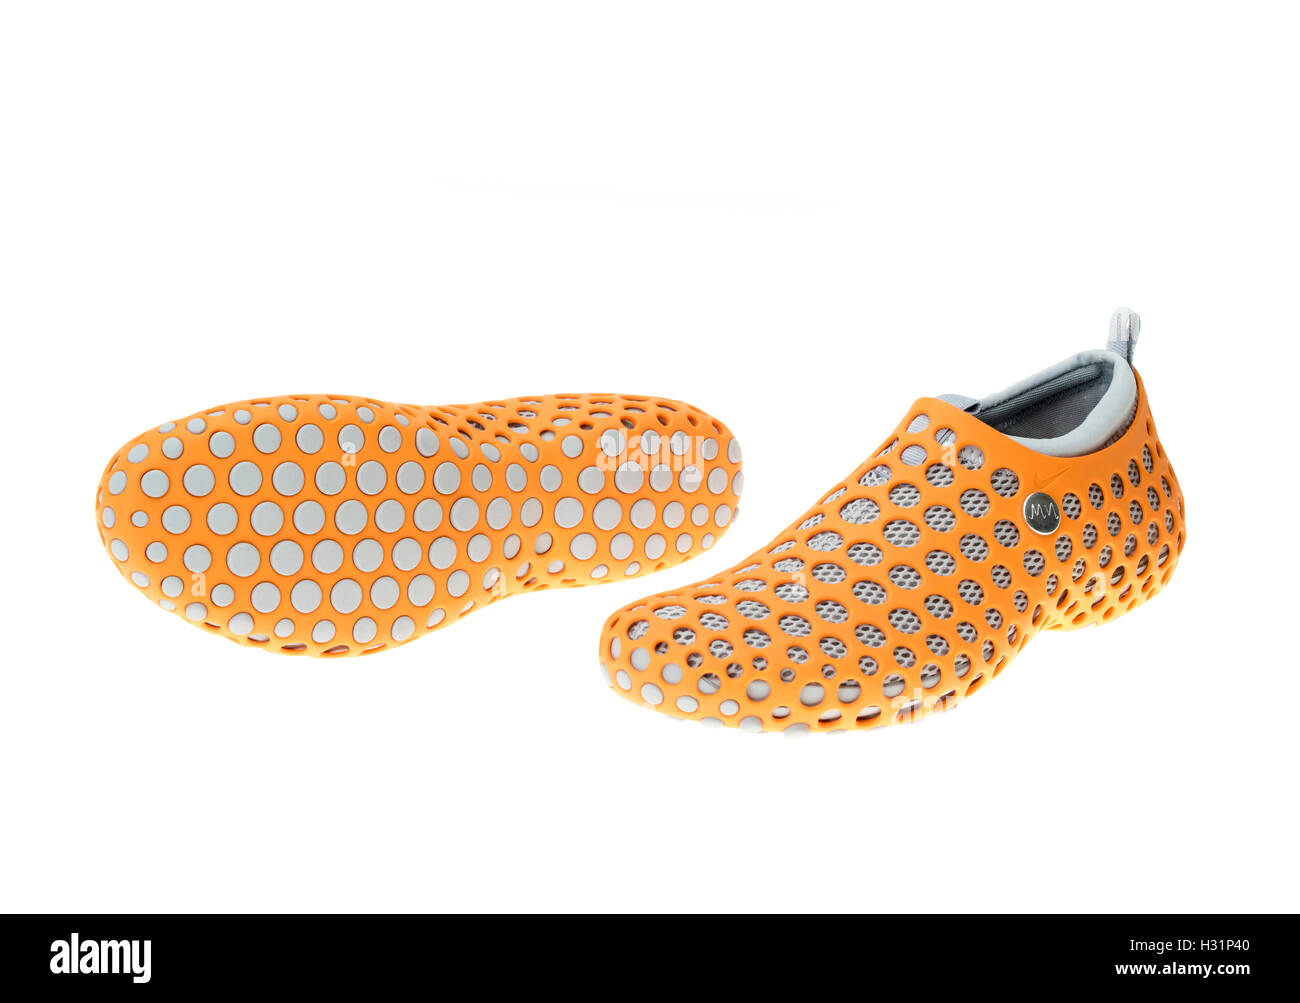 NIKE ZVEZDOCHKA sports shoes by industrial designer MARC NEWSON Stock Photo  - Alamy